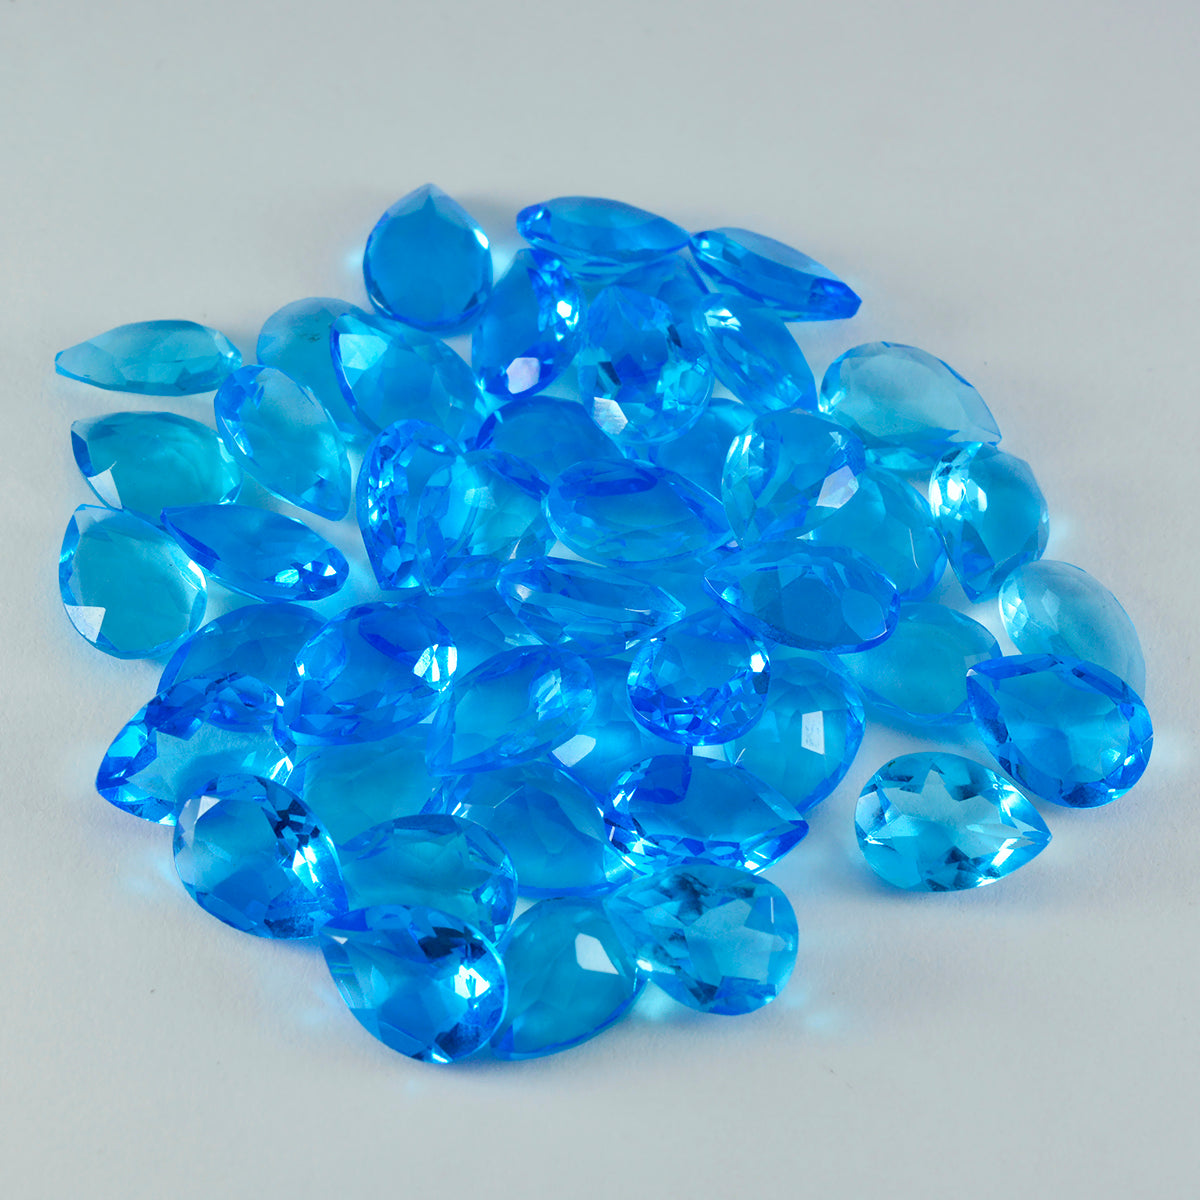 riyogems 1 pezzo di topazio blu cz sfaccettato 7x10 mm a forma di pera, gemme sfuse di ottima qualità